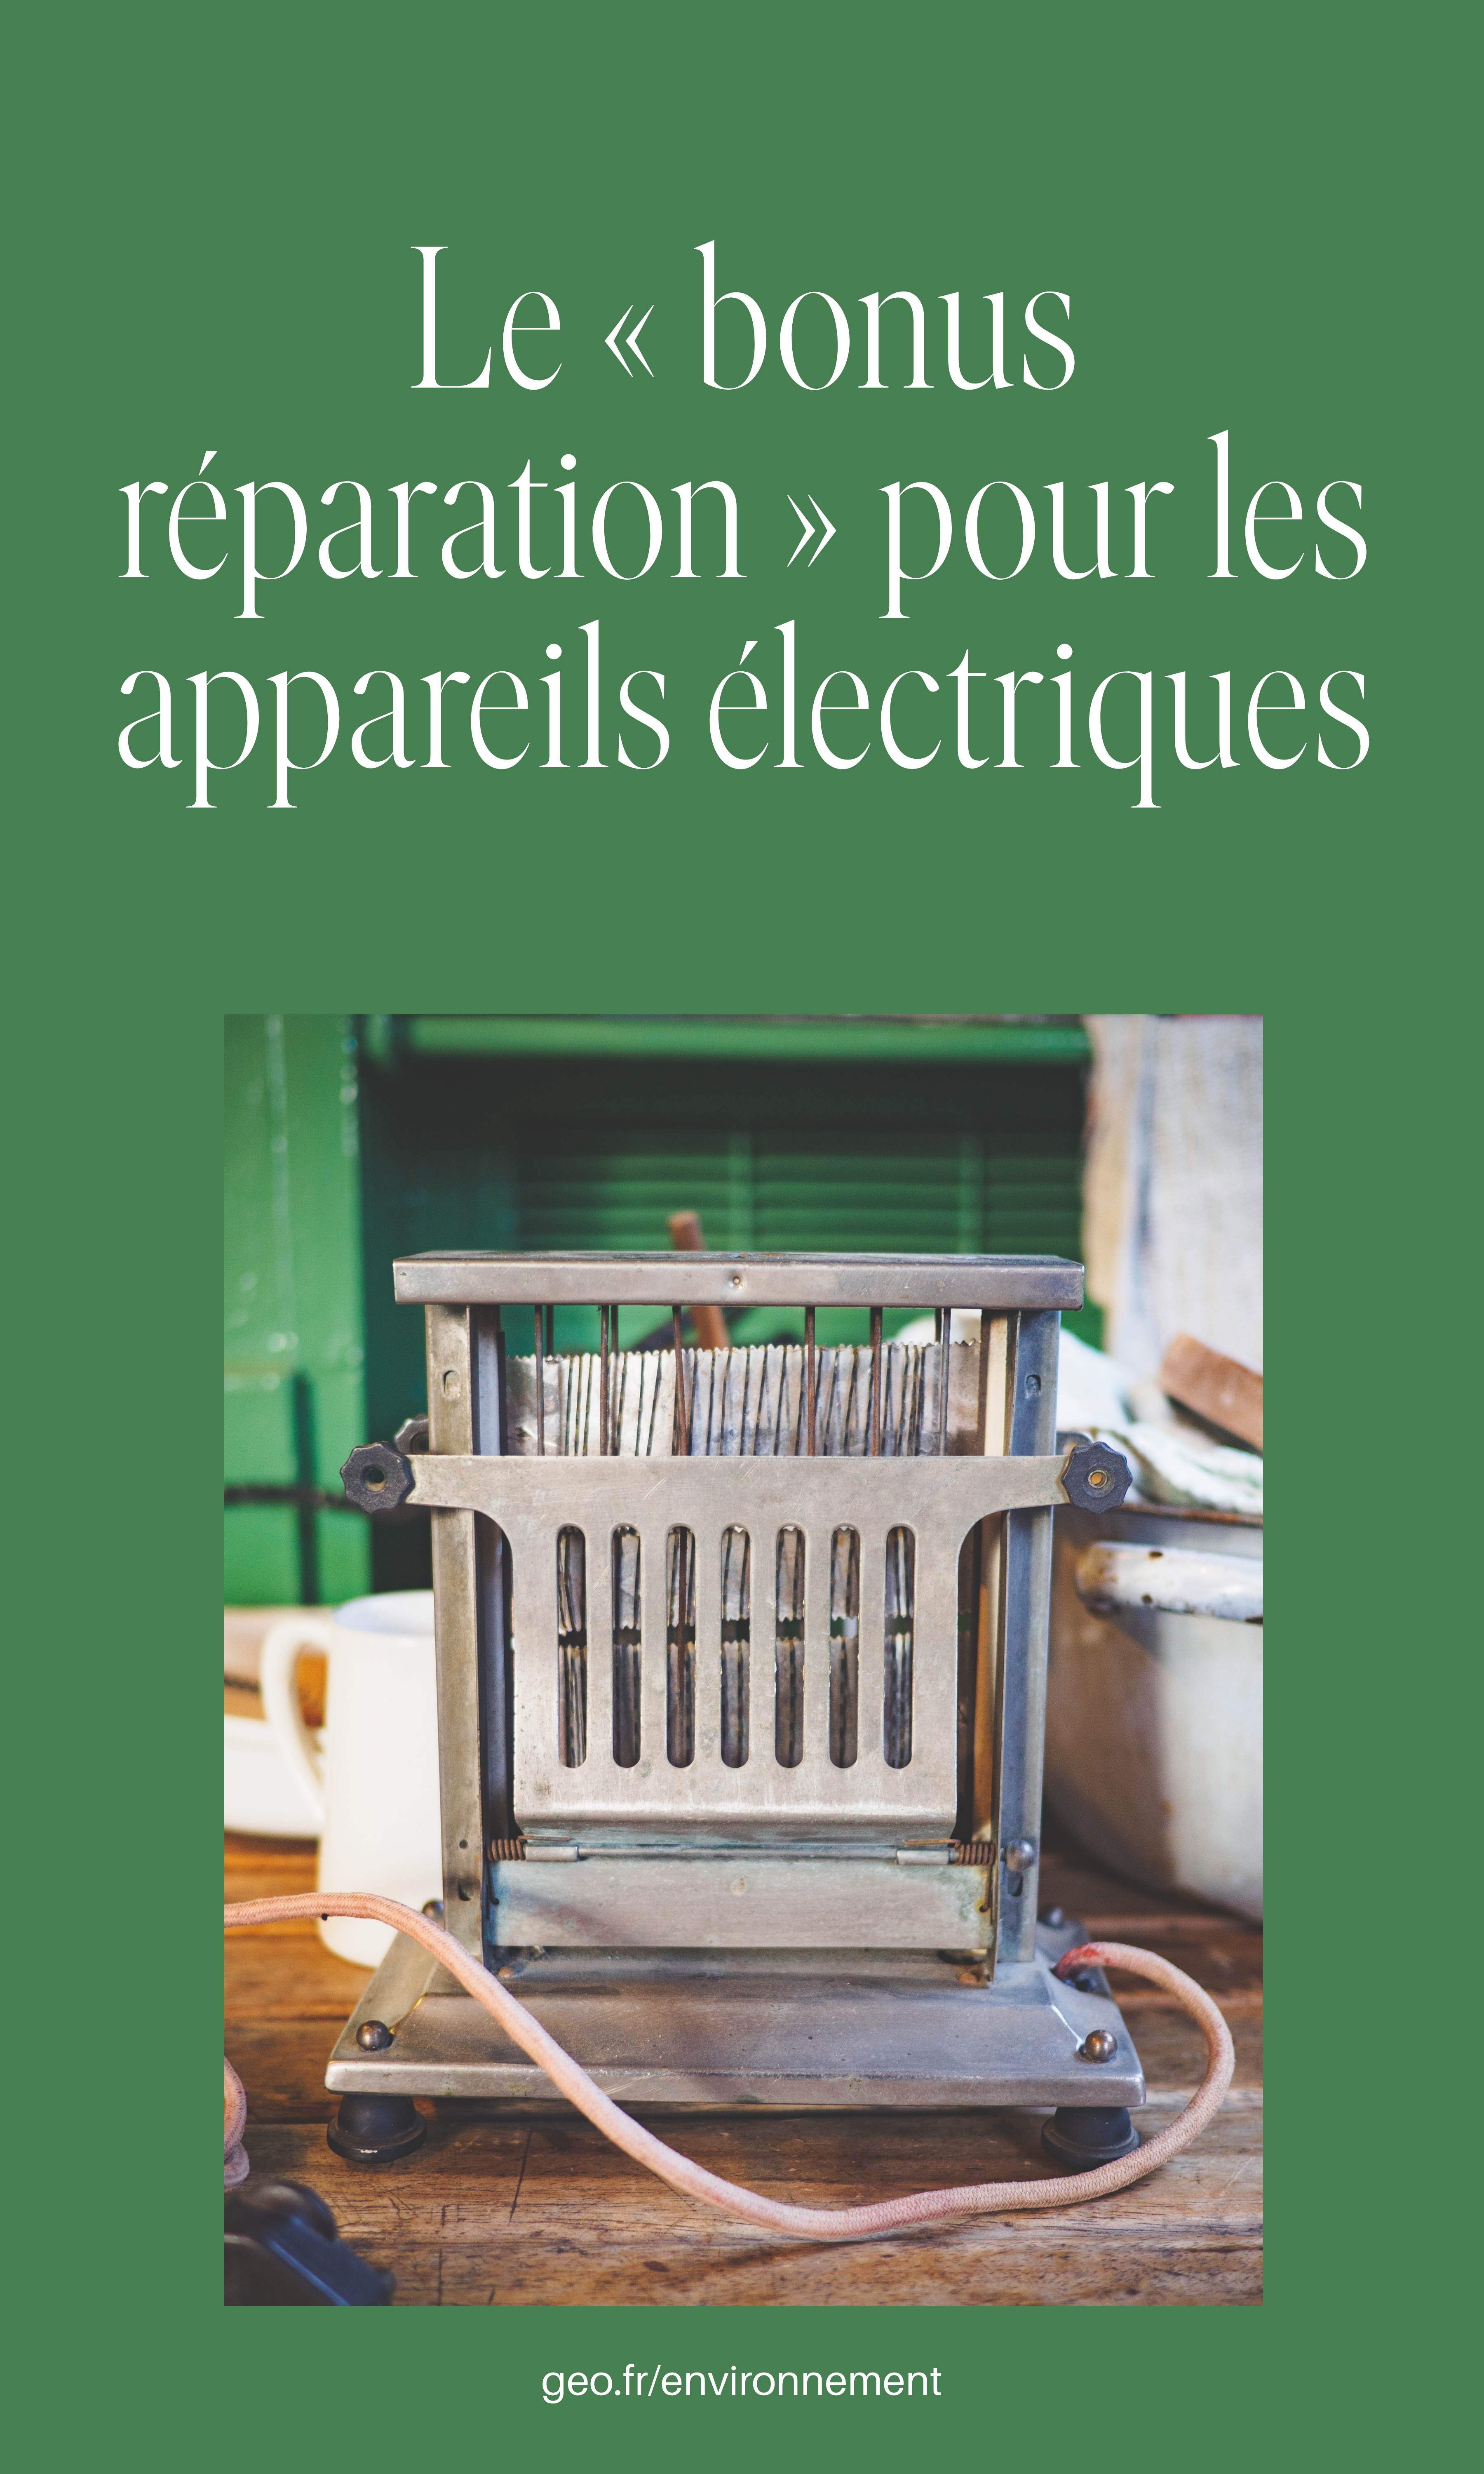 The « repair bonus » for electrical appliances